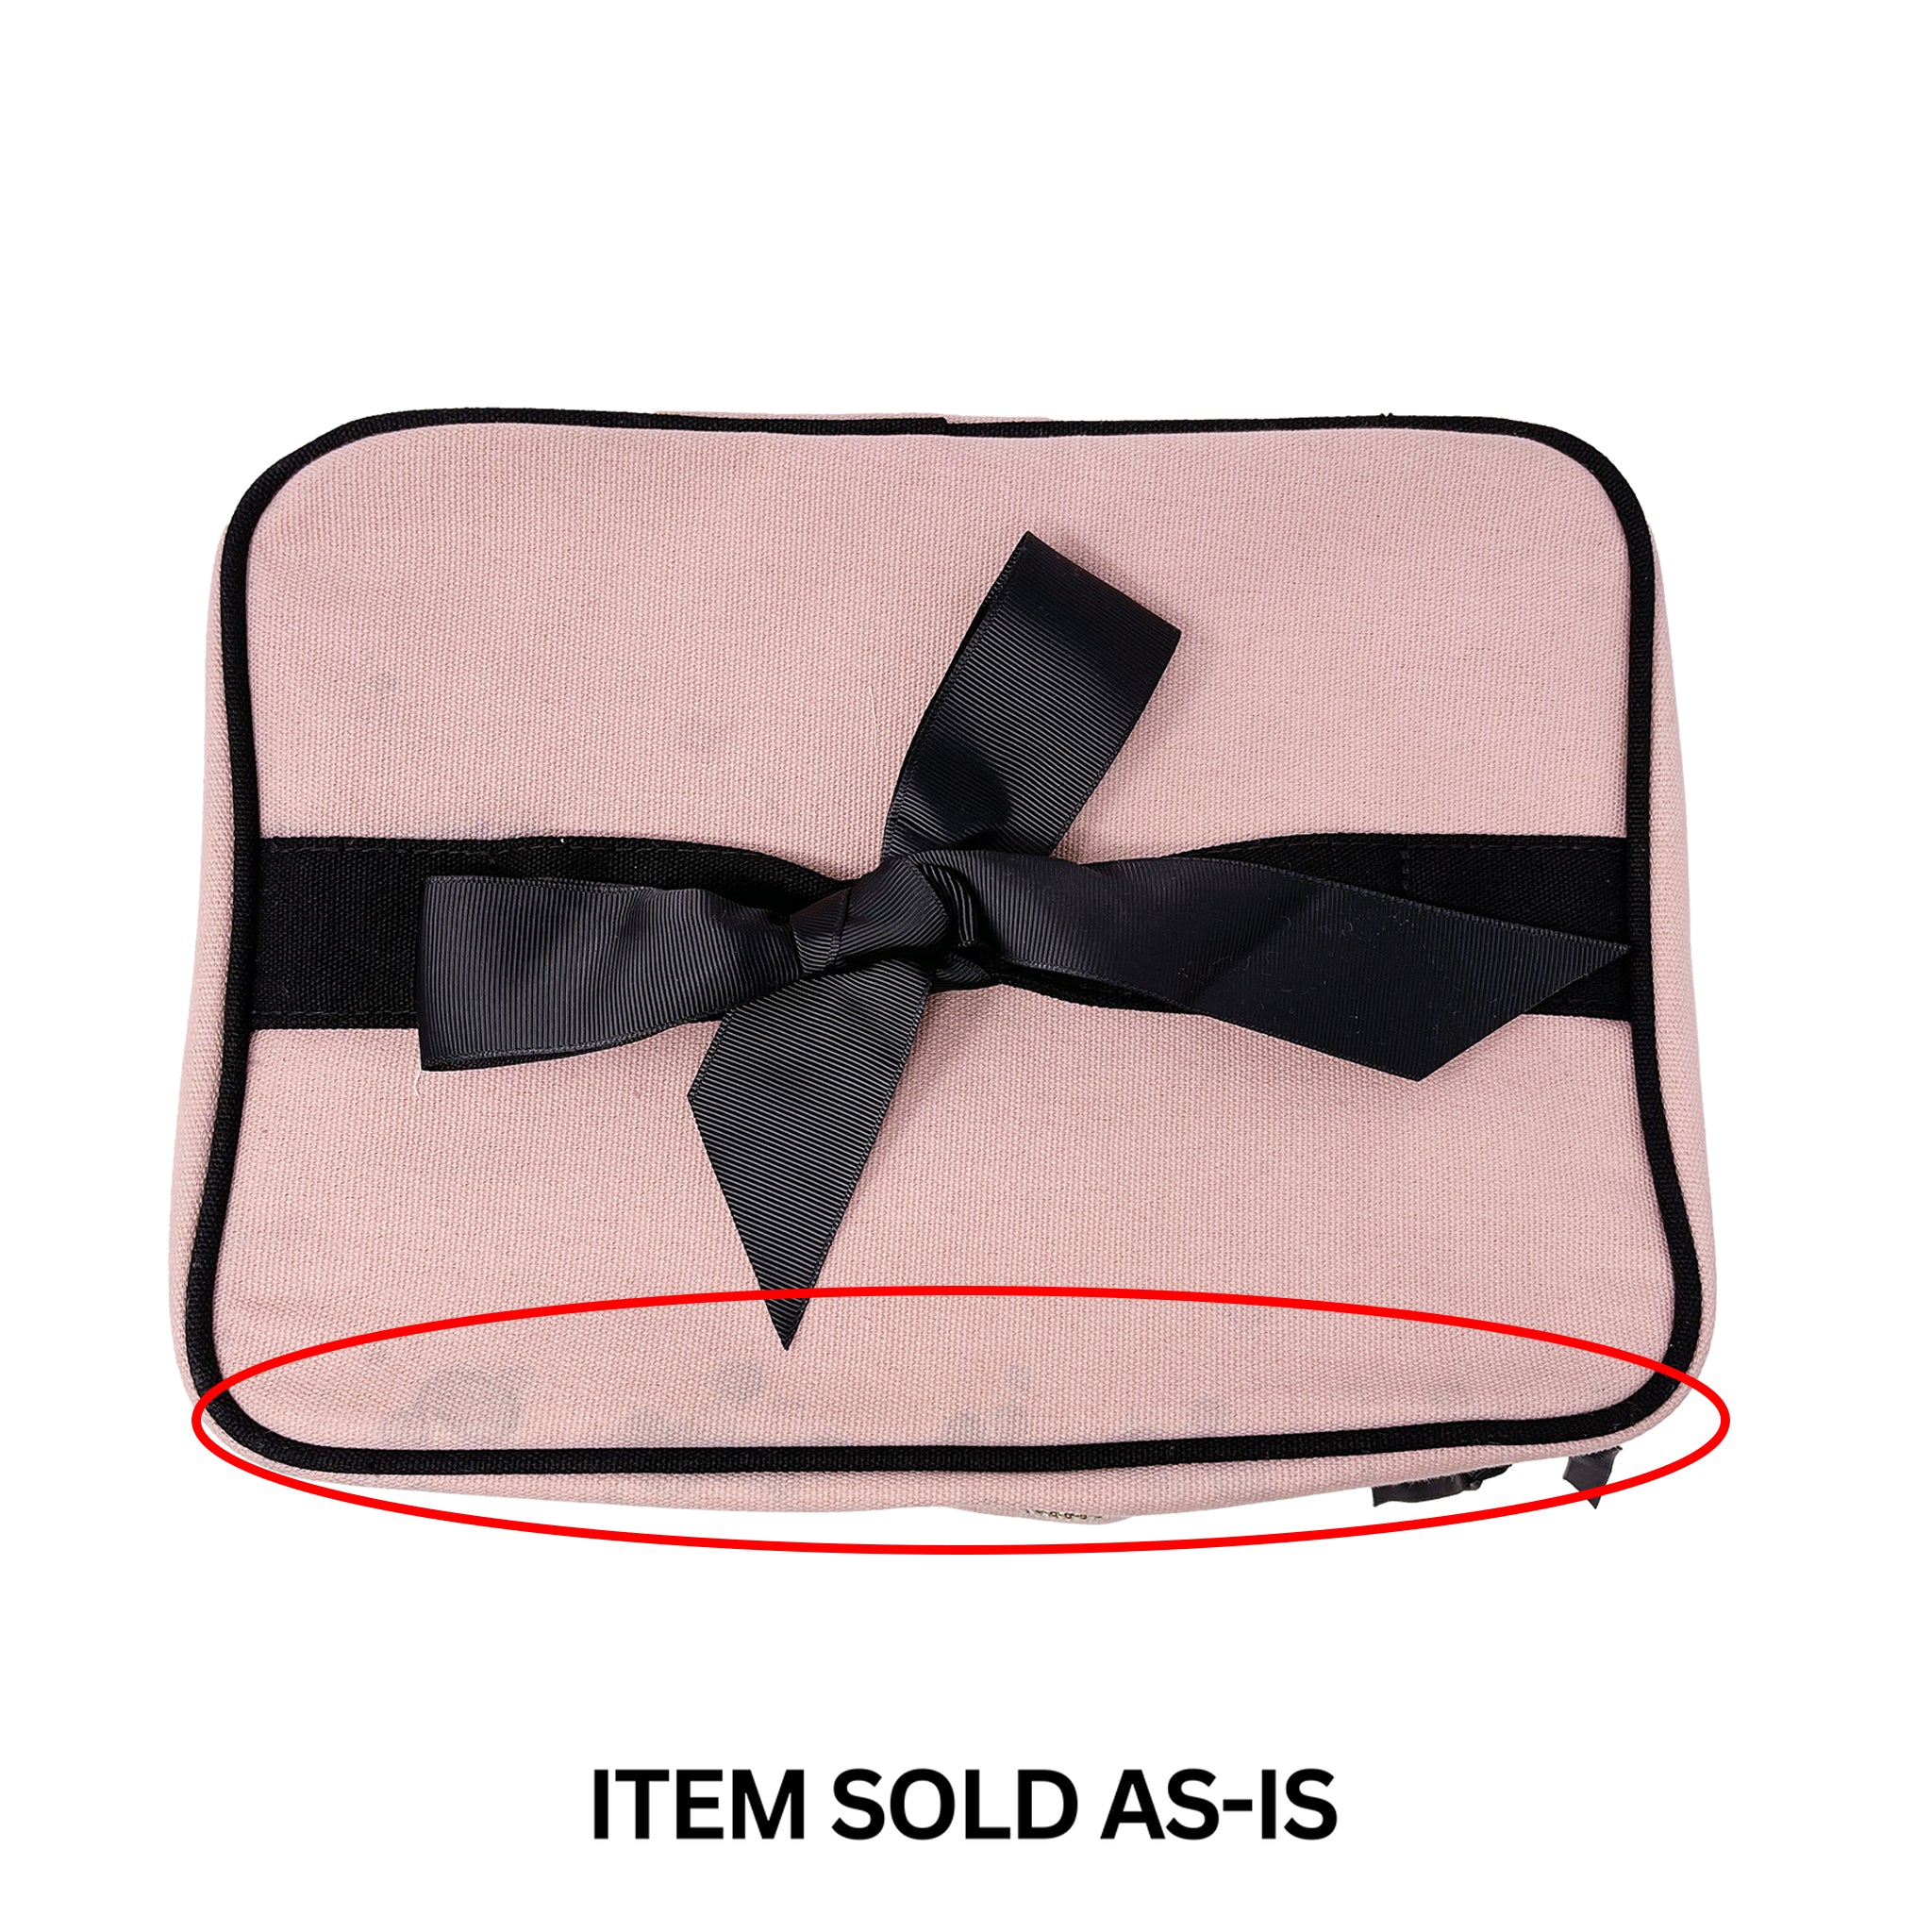 SALES BIN - My Vanity Large Beauty Box, Pink/Blush | Bag-all